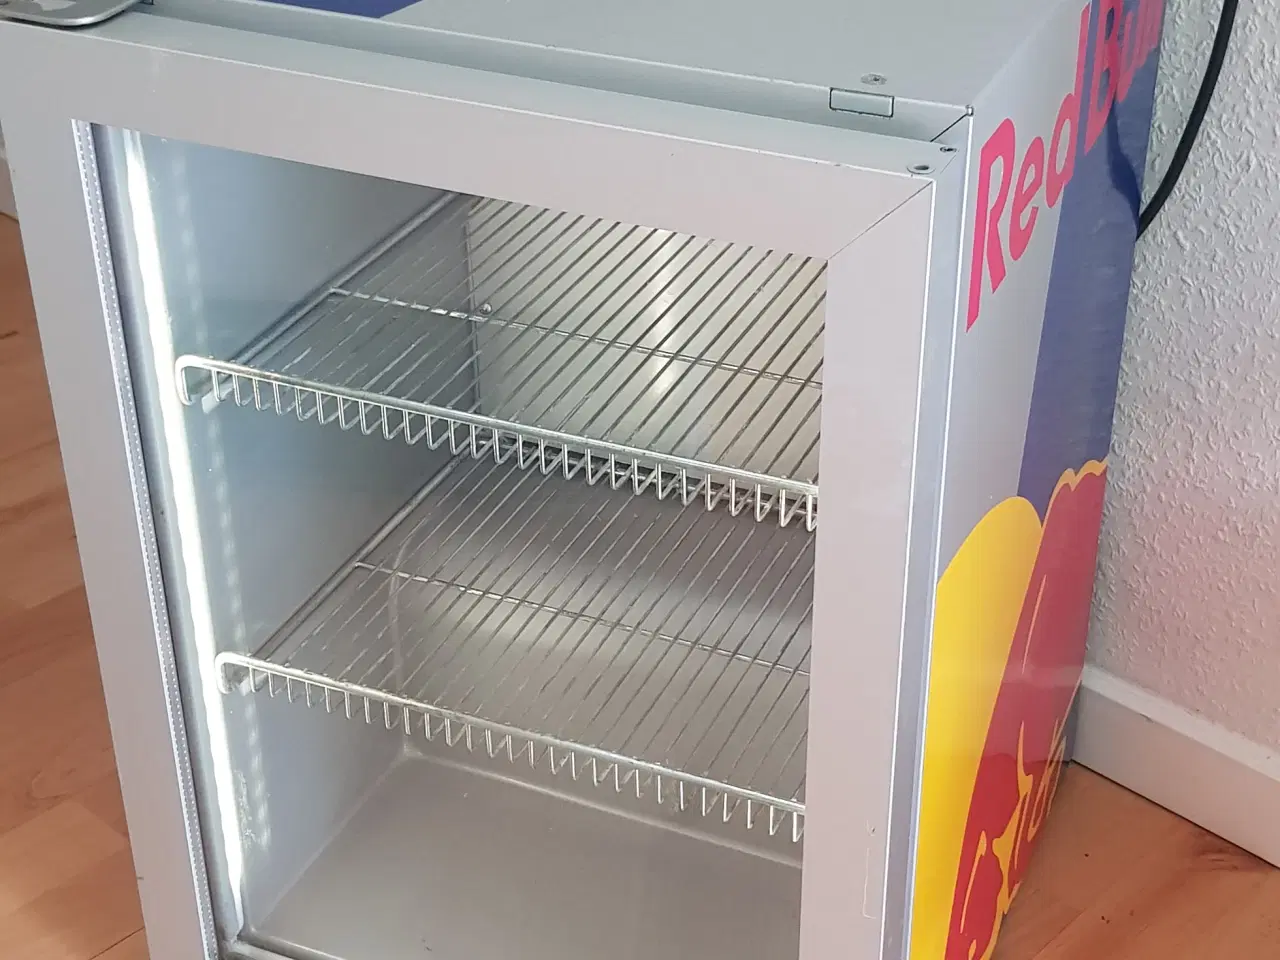 Billede 1 - redbull mini køleskab